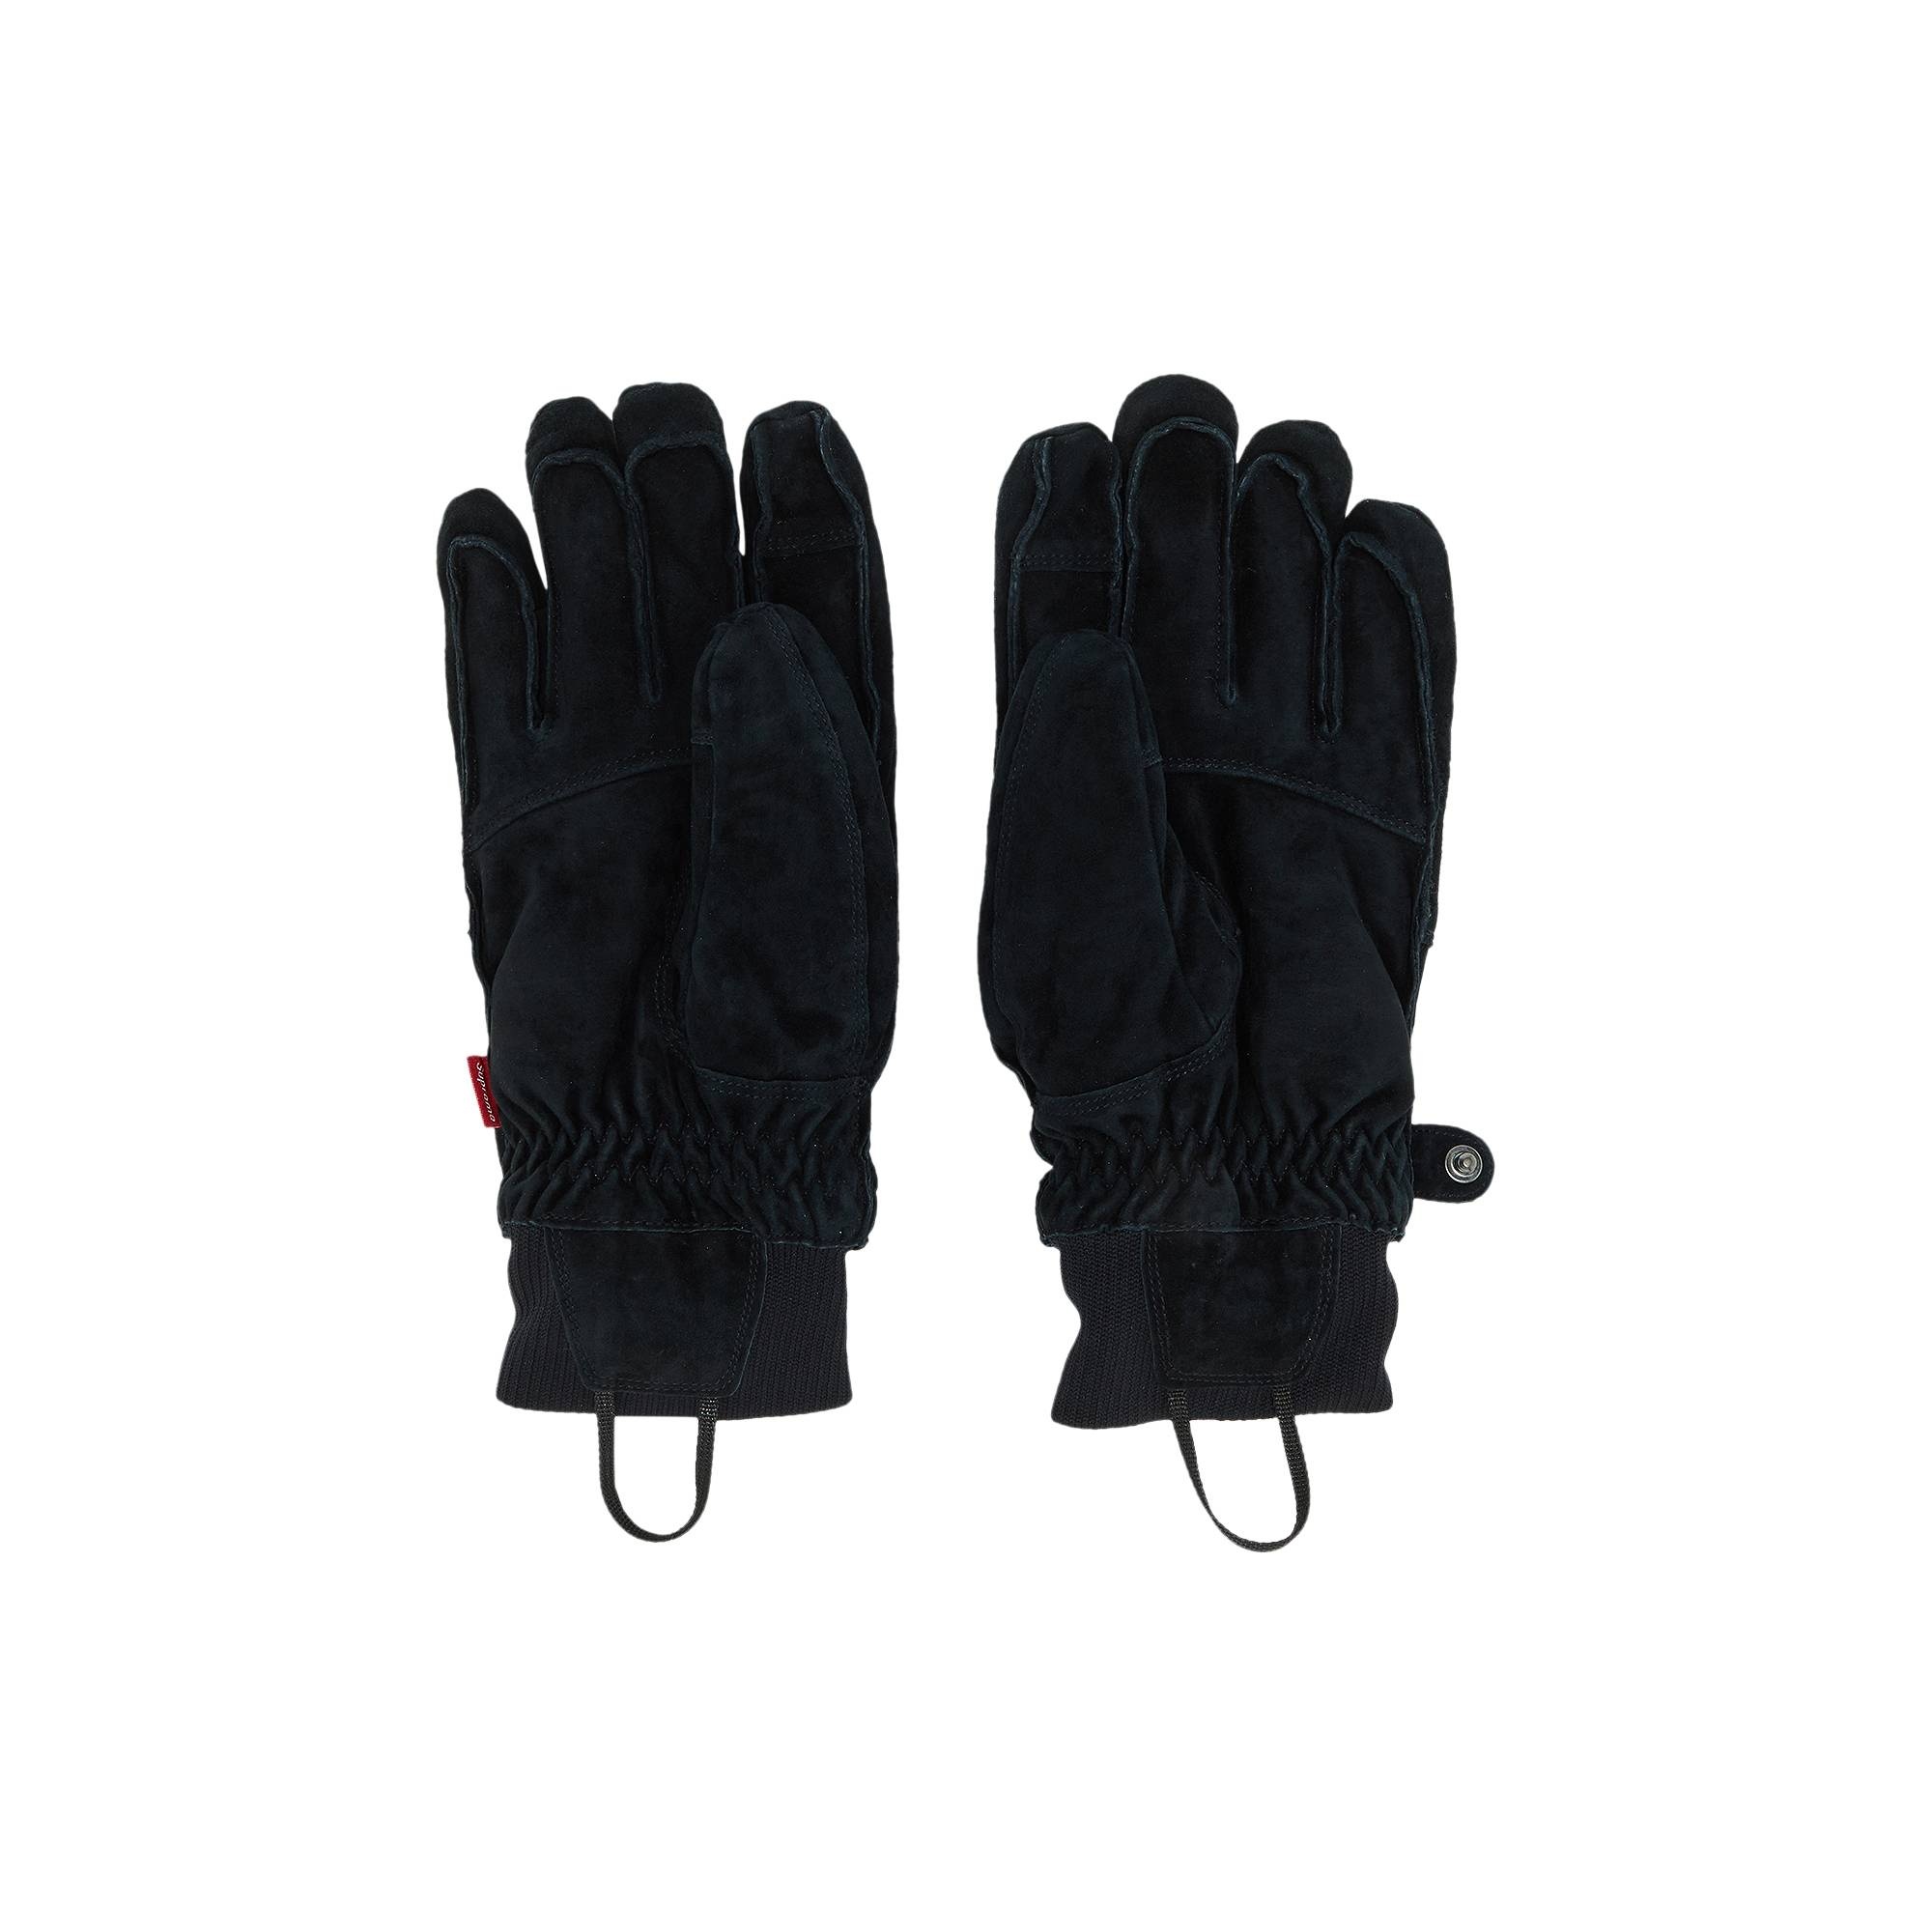 Supreme x The North Face Suede Glove 'Black' - 2